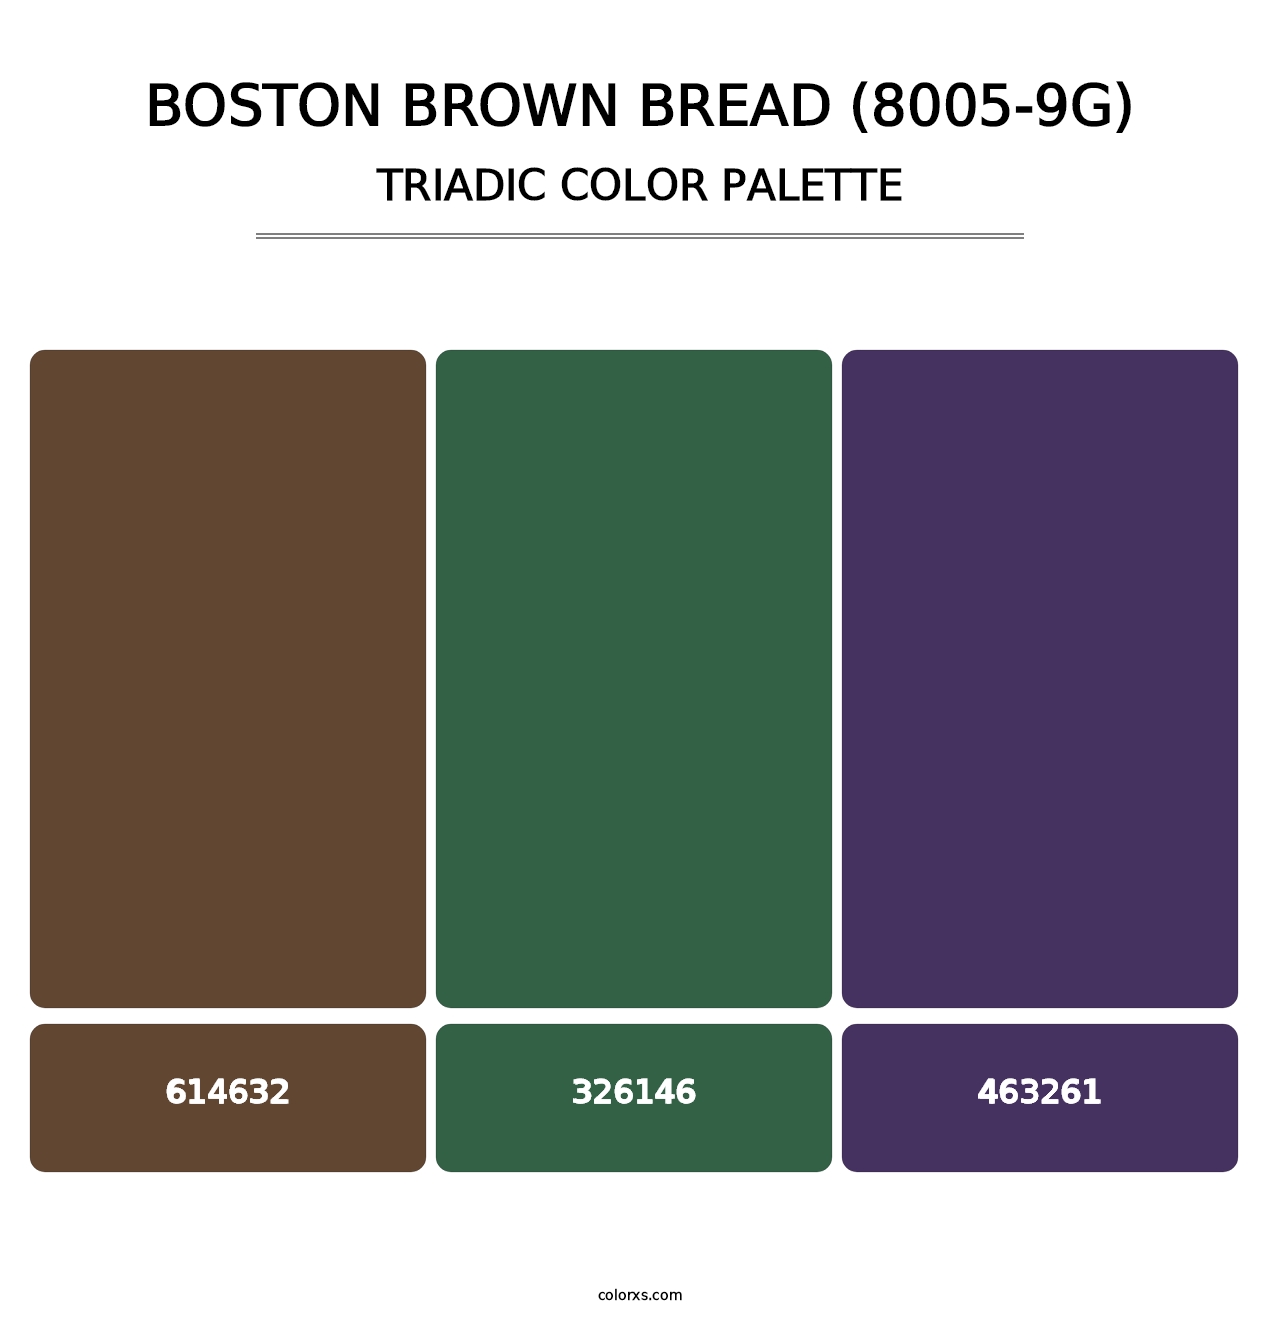 Boston Brown Bread (8005-9G) - Triadic Color Palette